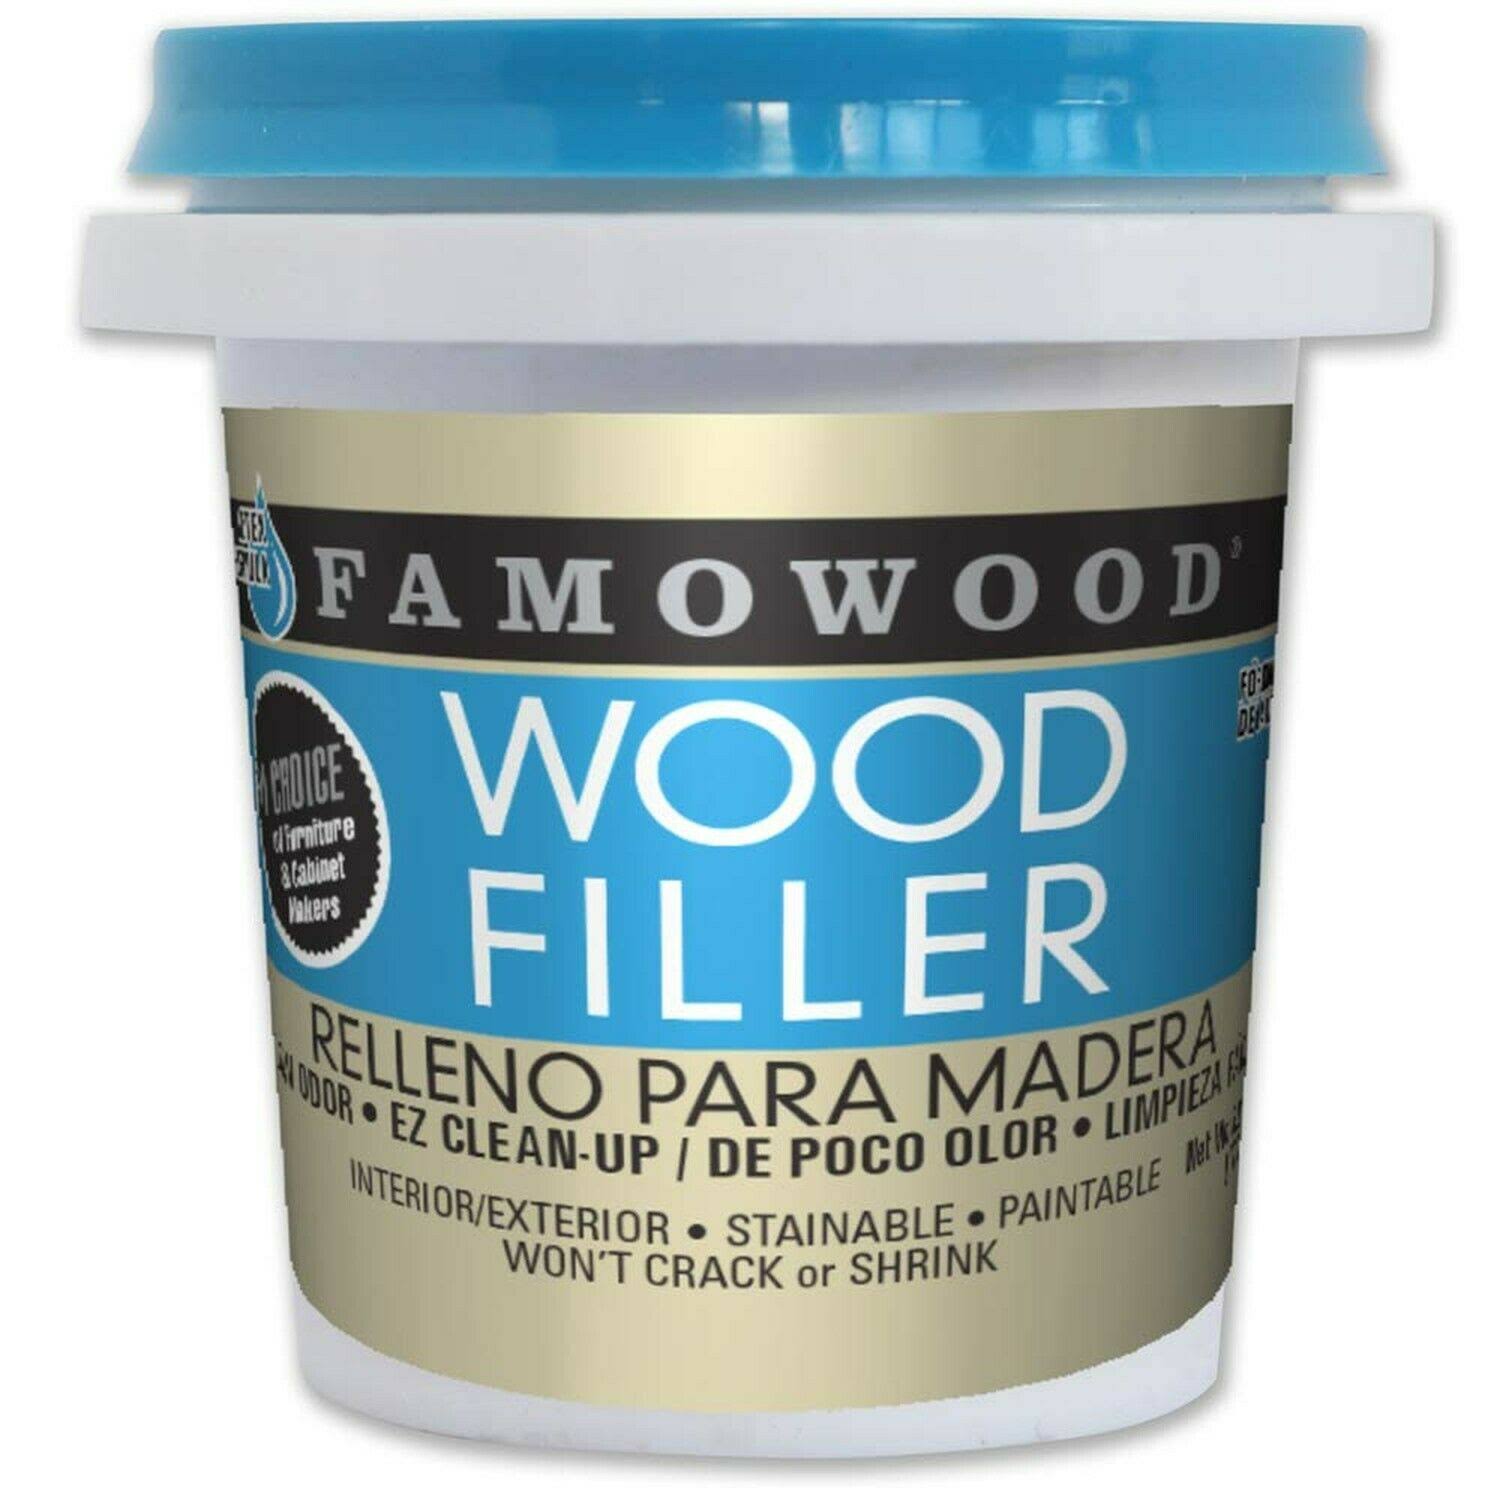 FamoWood 40042142 Latex Wood Filler - 1/4 Pint, Walnut